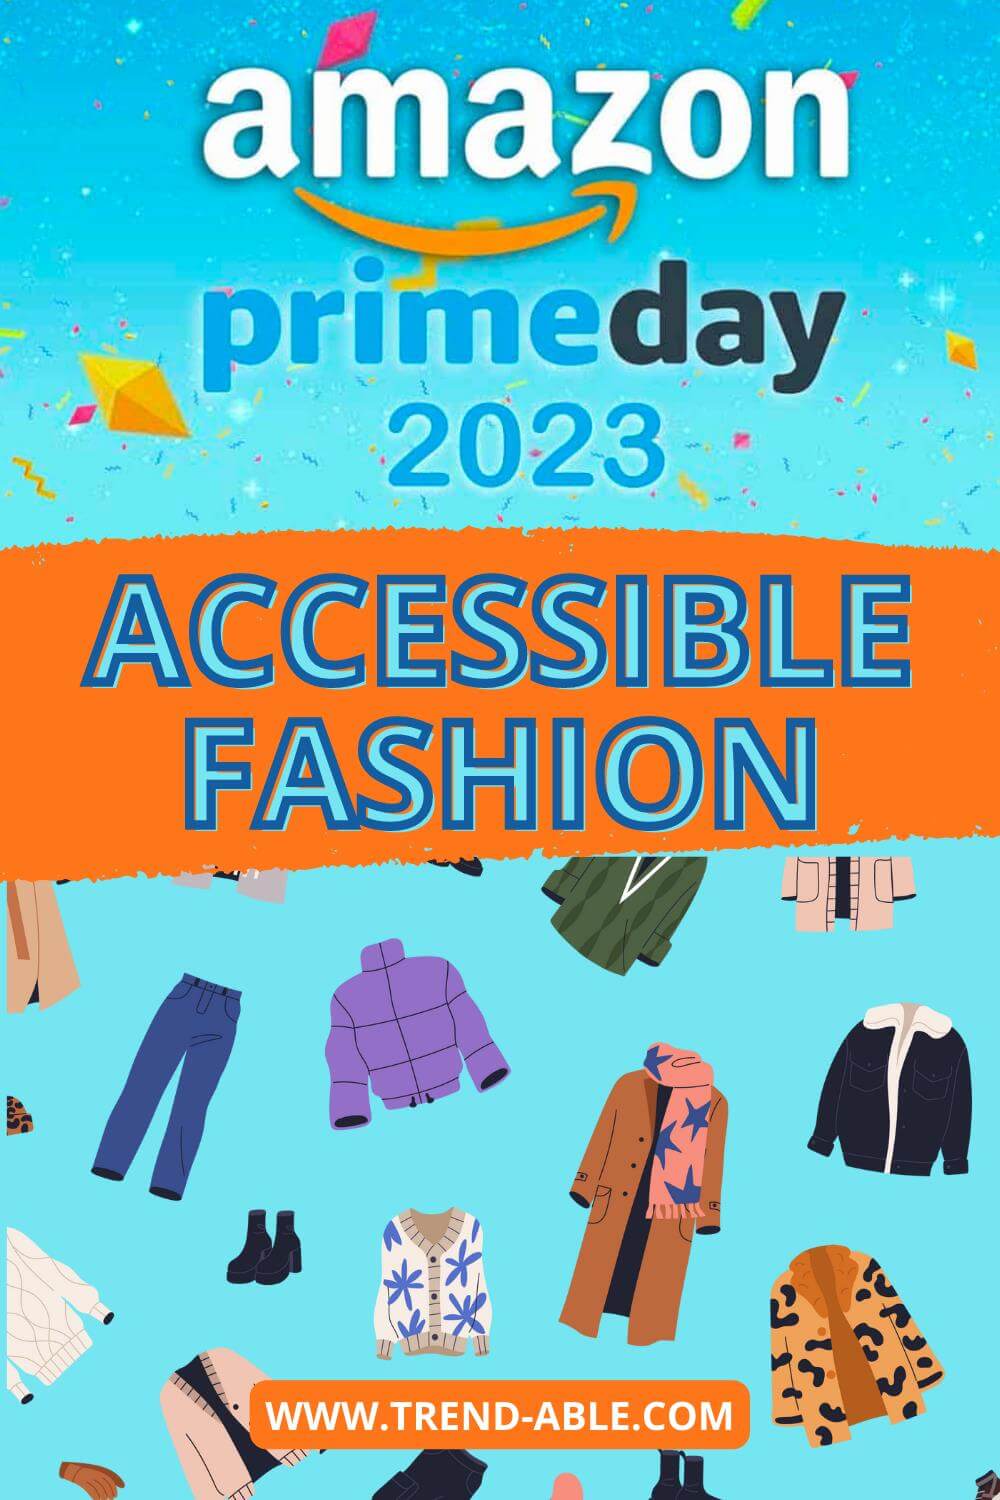 Amazon Prime Day 2023 Accessible Fashion